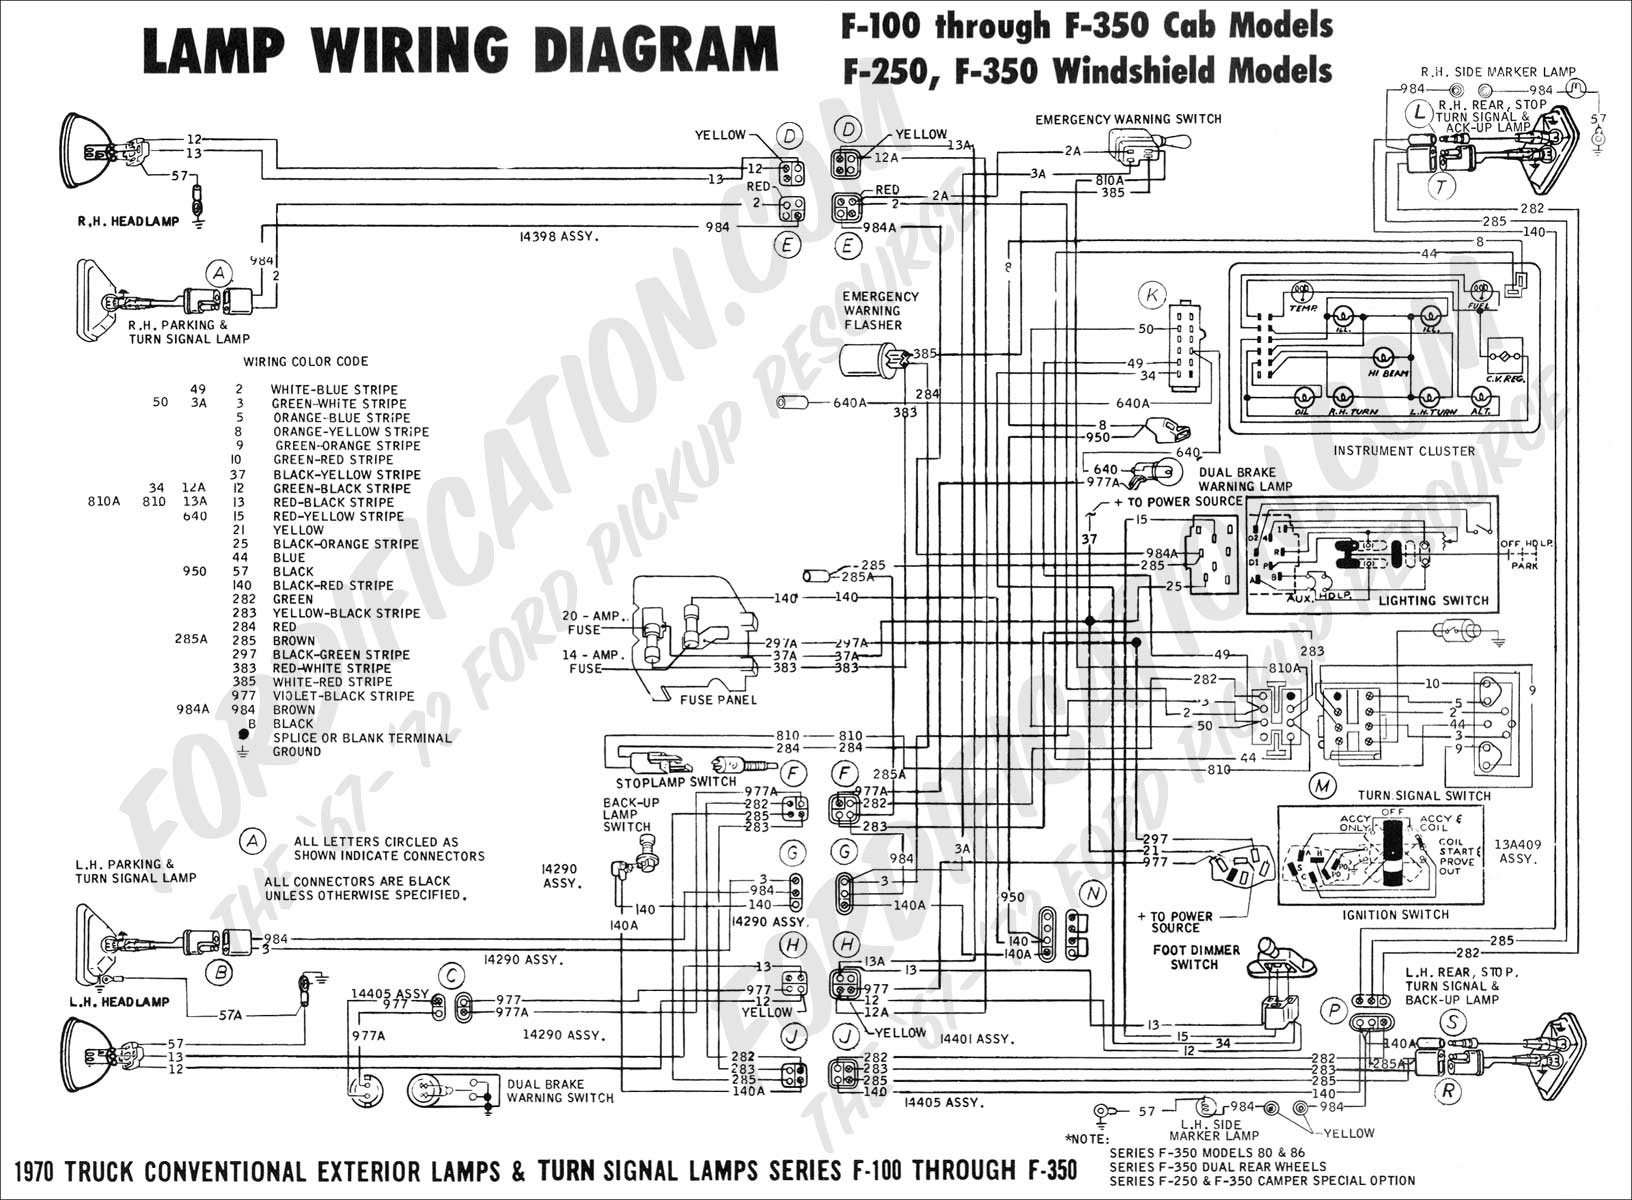 2004 F250 Wiring Diagram - All Wiring Diagram Data - Ford Wiring Diagram